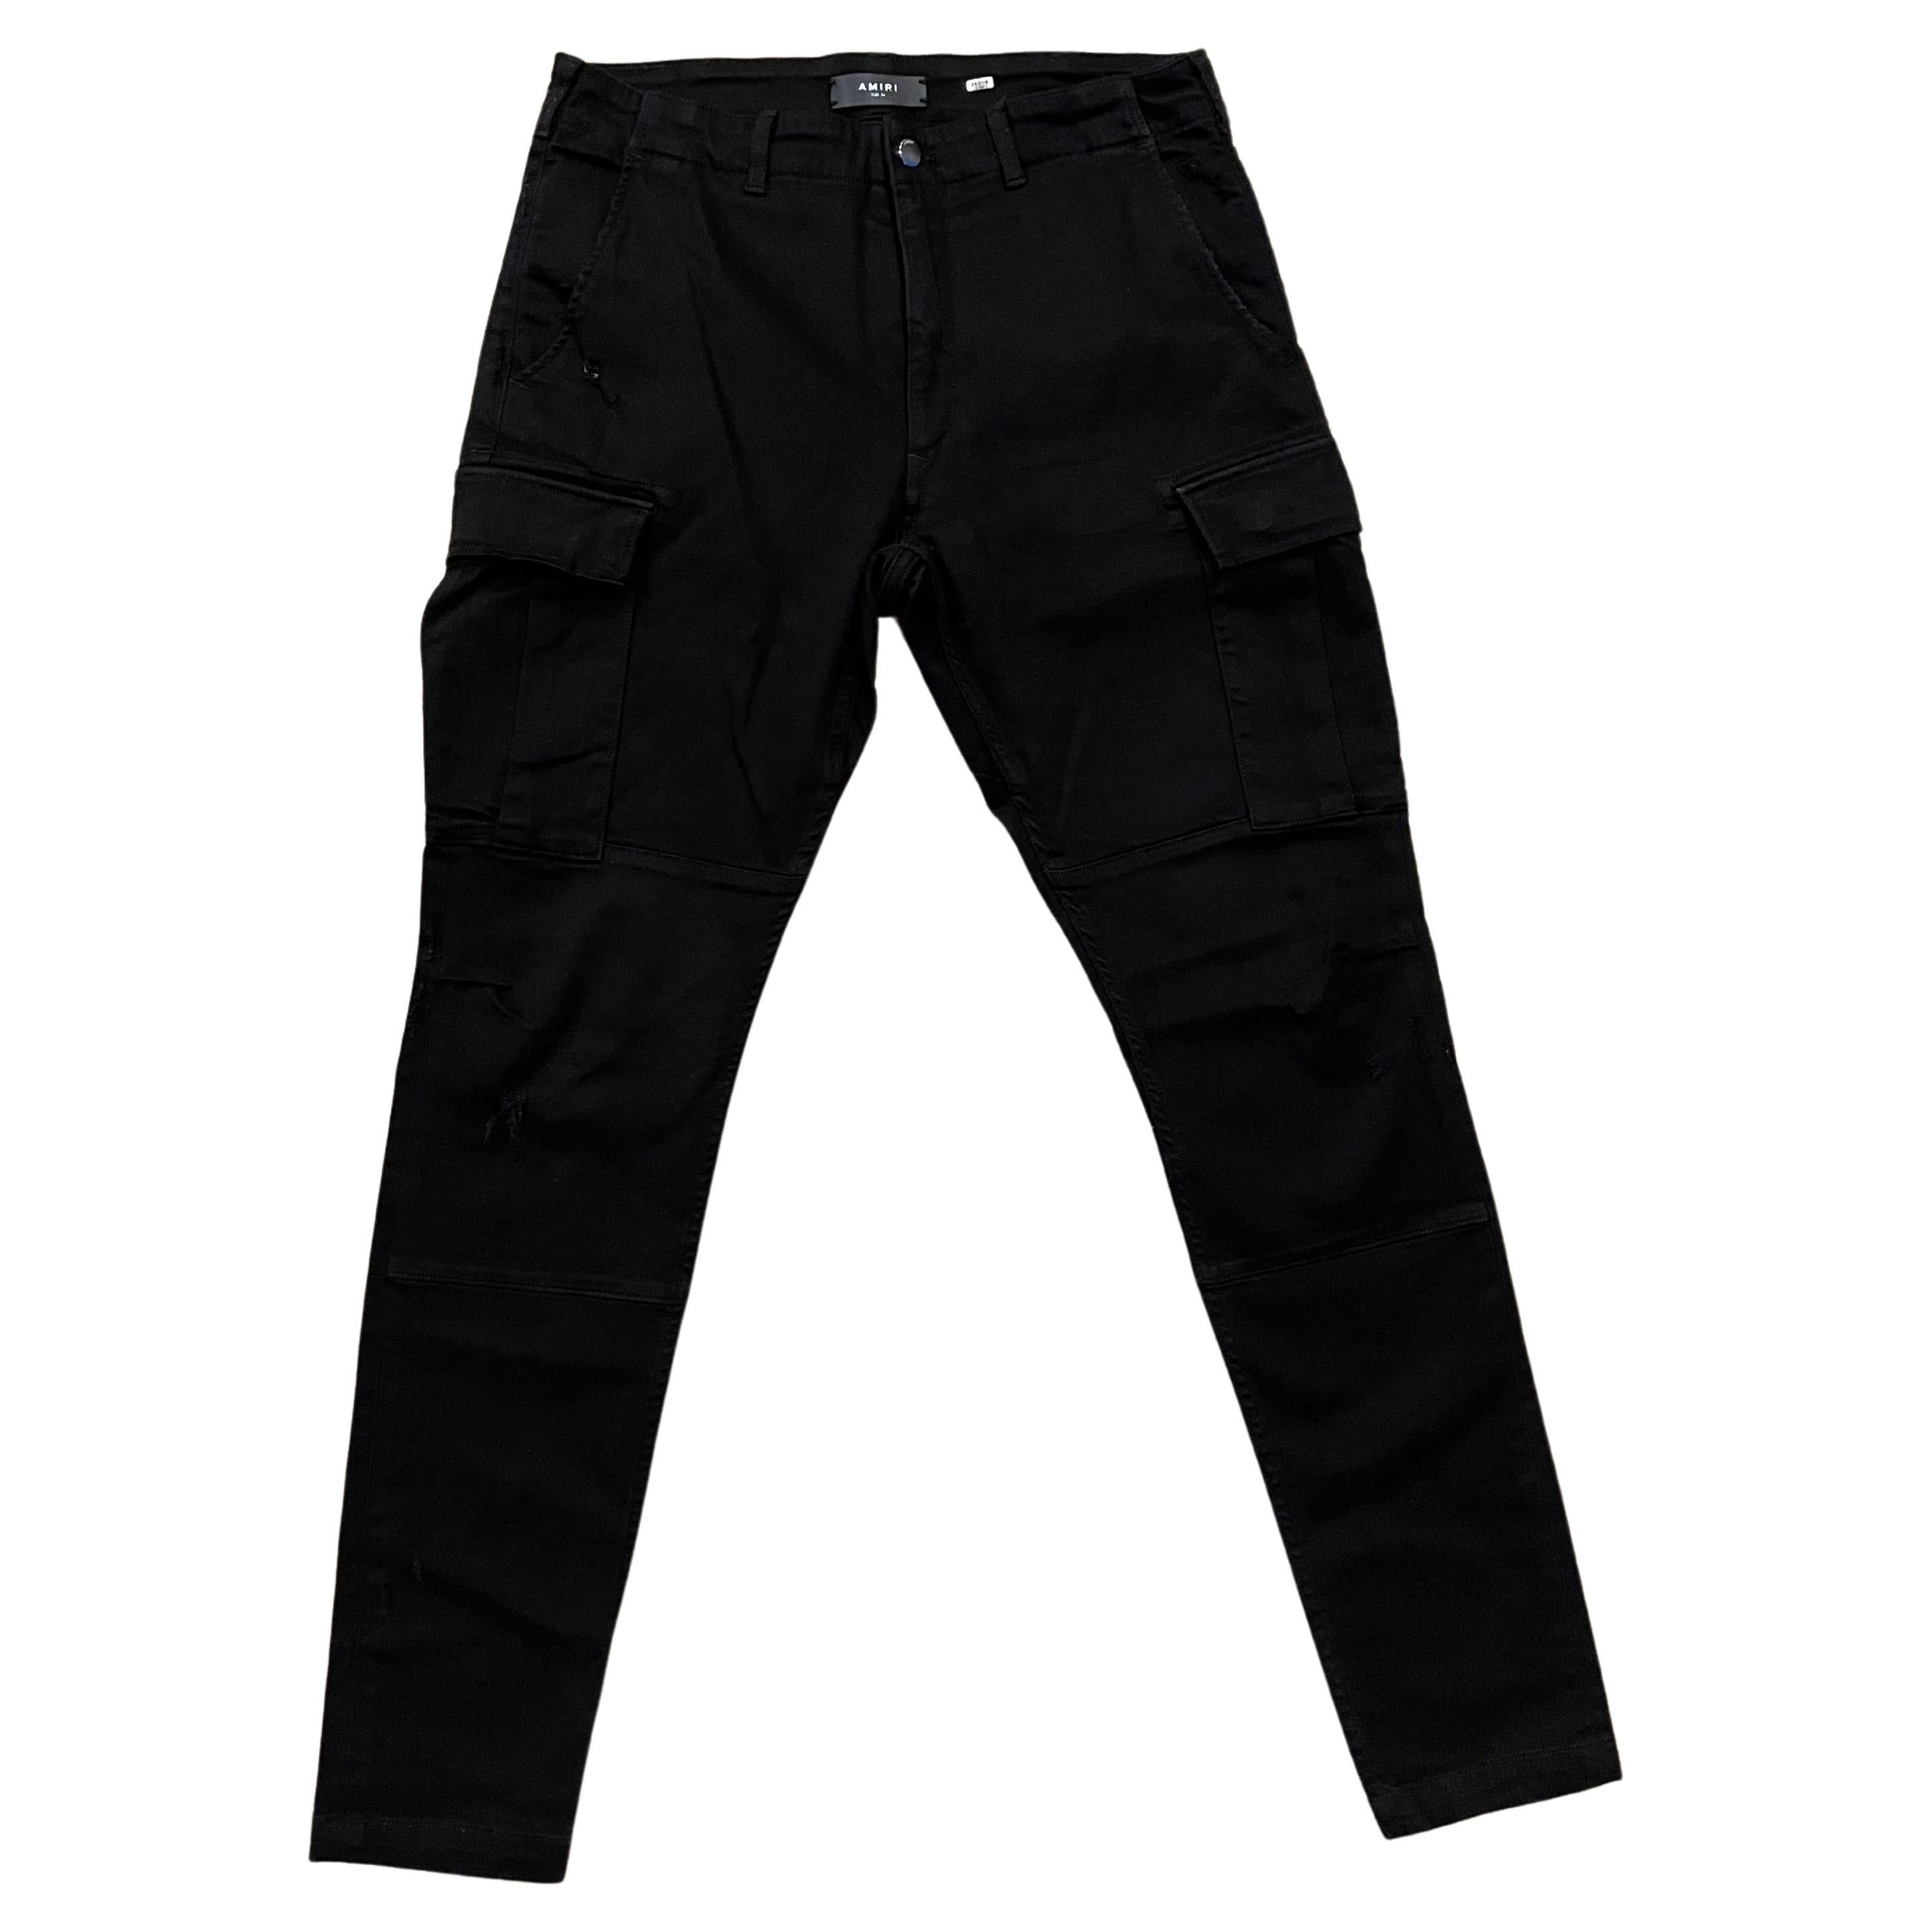 Mike Amiri Black Cargo Pants size 34